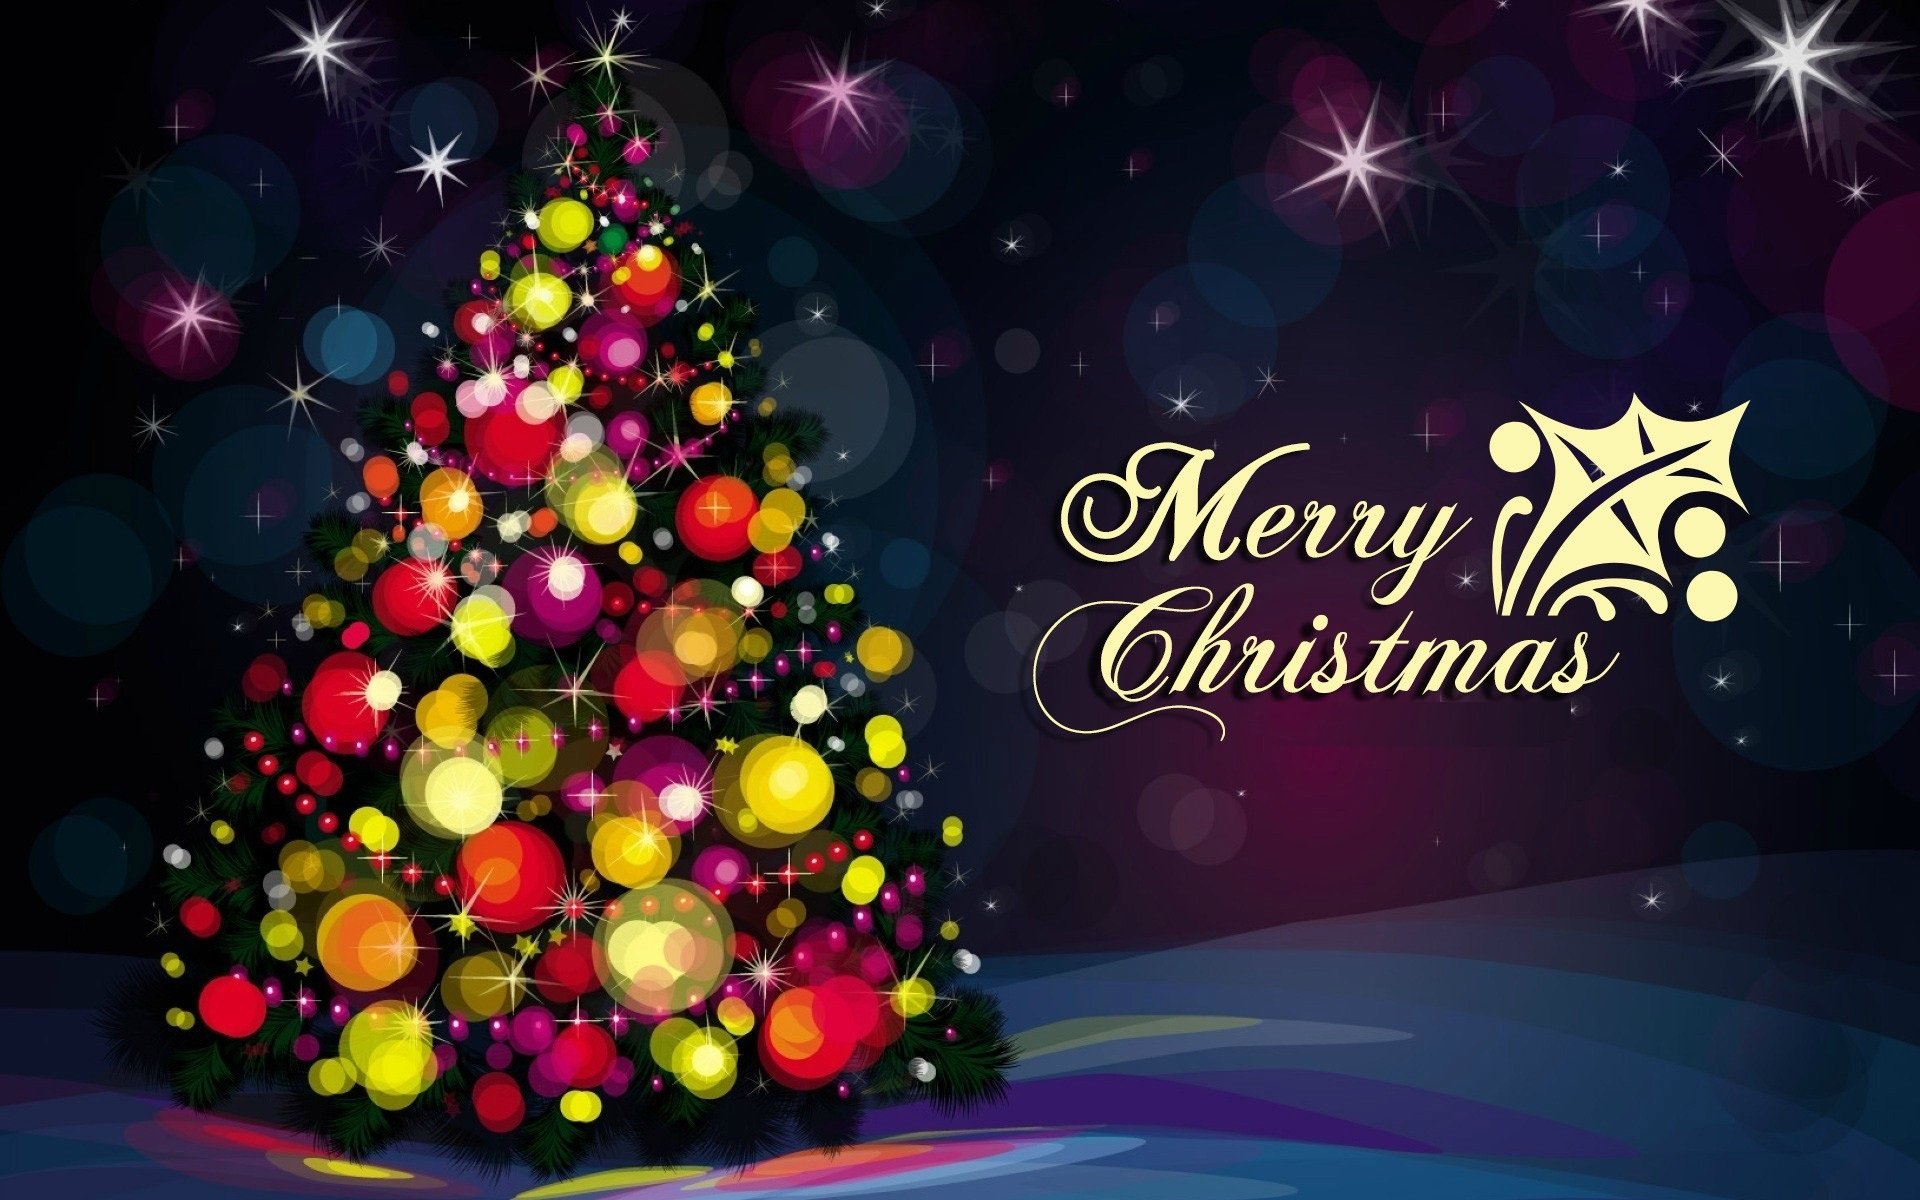 navidad live wallpaper,árbol de navidad,decoración navideña,navidad,nochebuena,decoración navideña